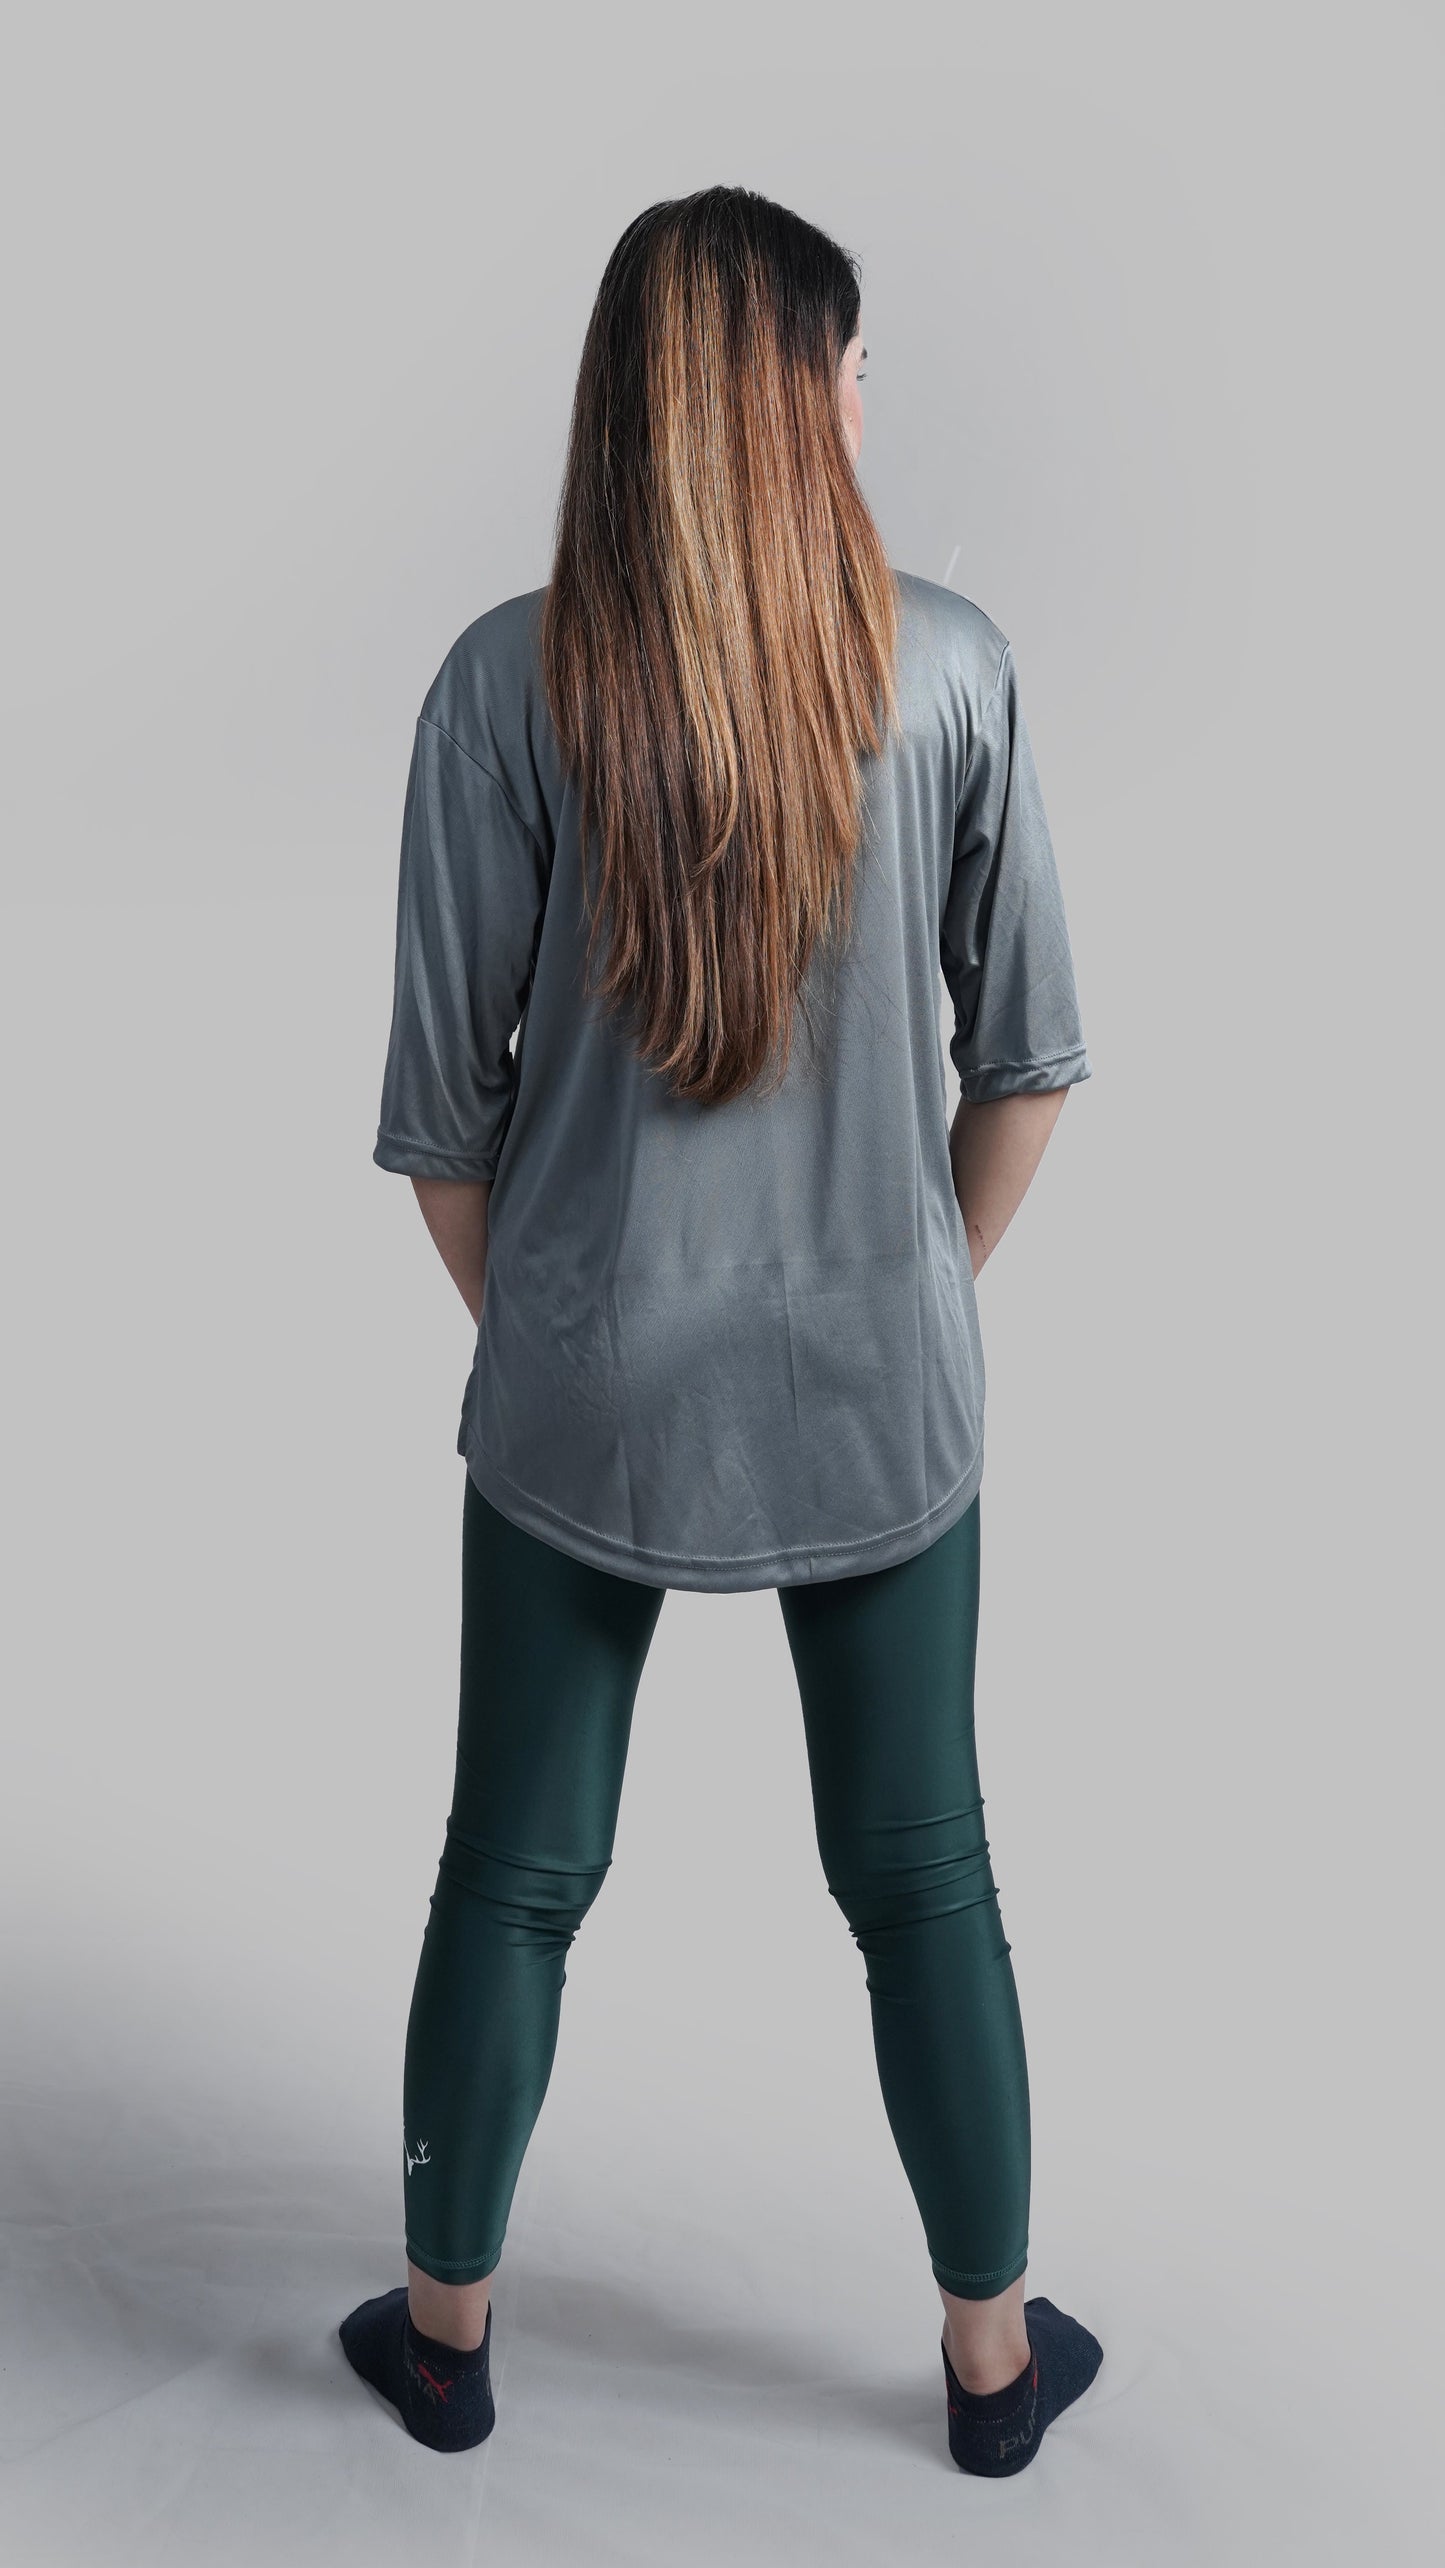 Women Fraction Tee 1.0 (Dark Grey) - Stag Clothing 